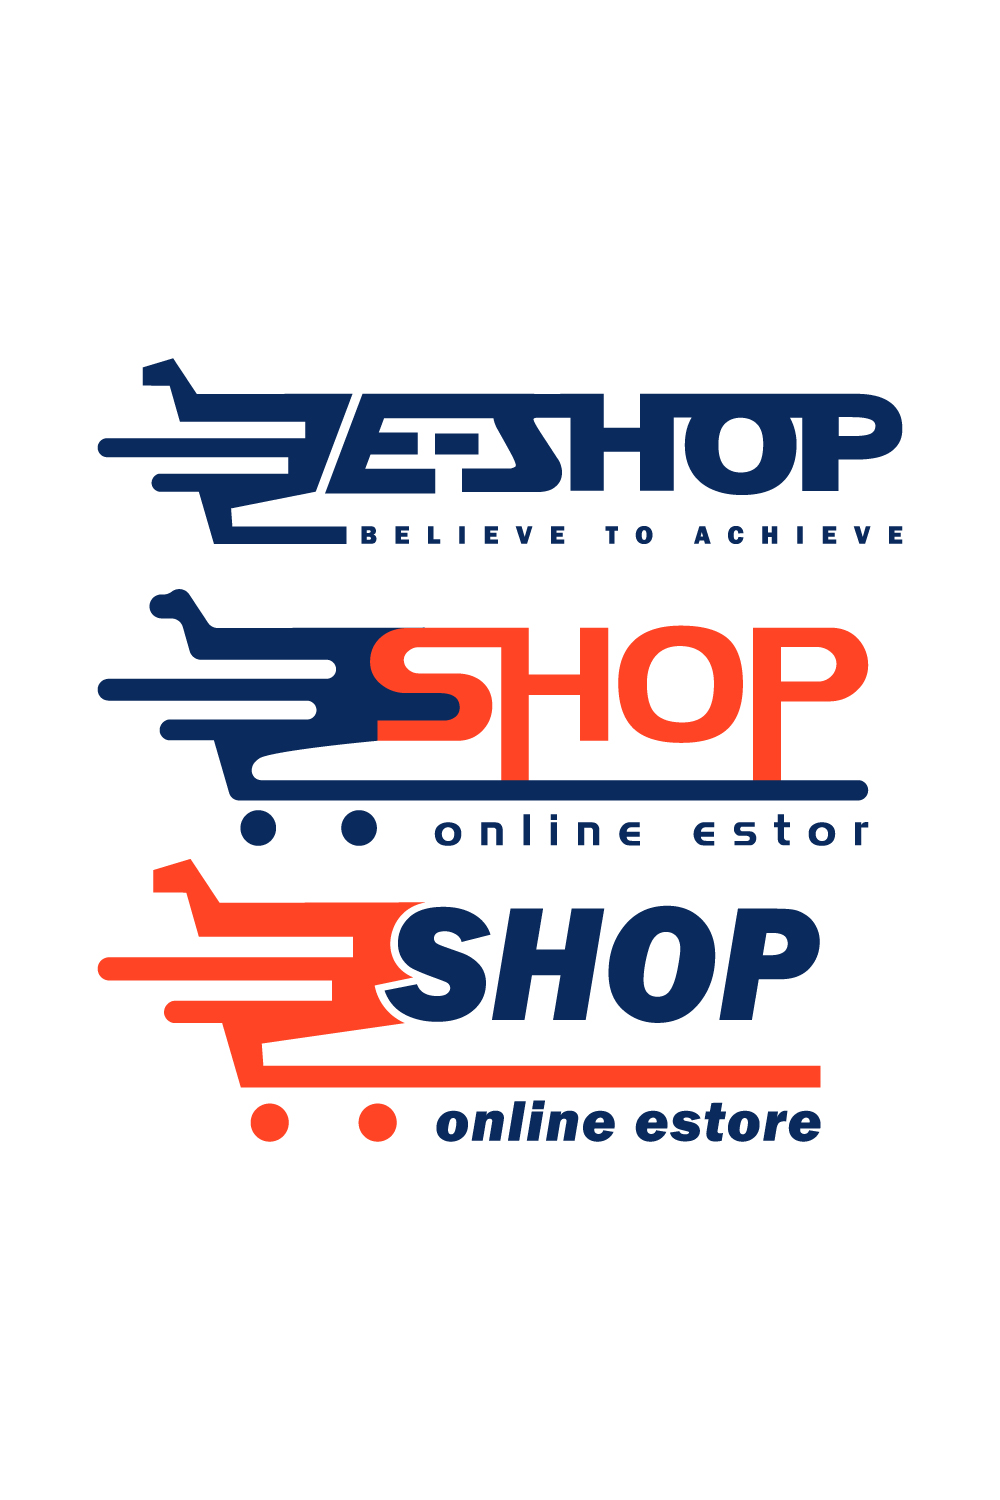 Online shop logo pinterest preview image.